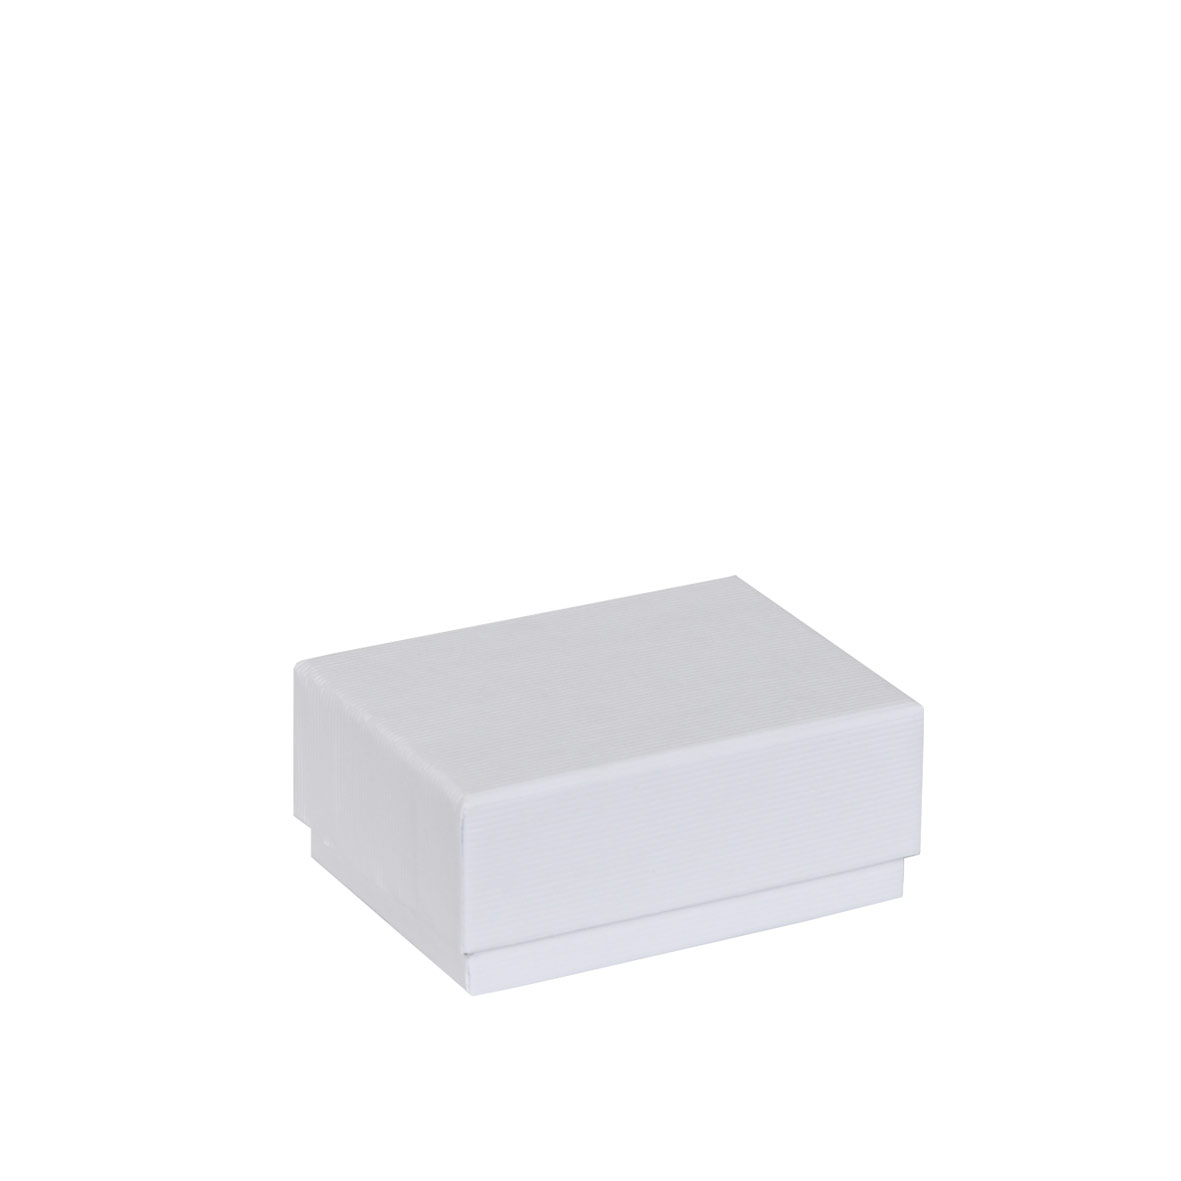 Boîte cloche carton blanc rainuré 8.6x6.4x3.7cm